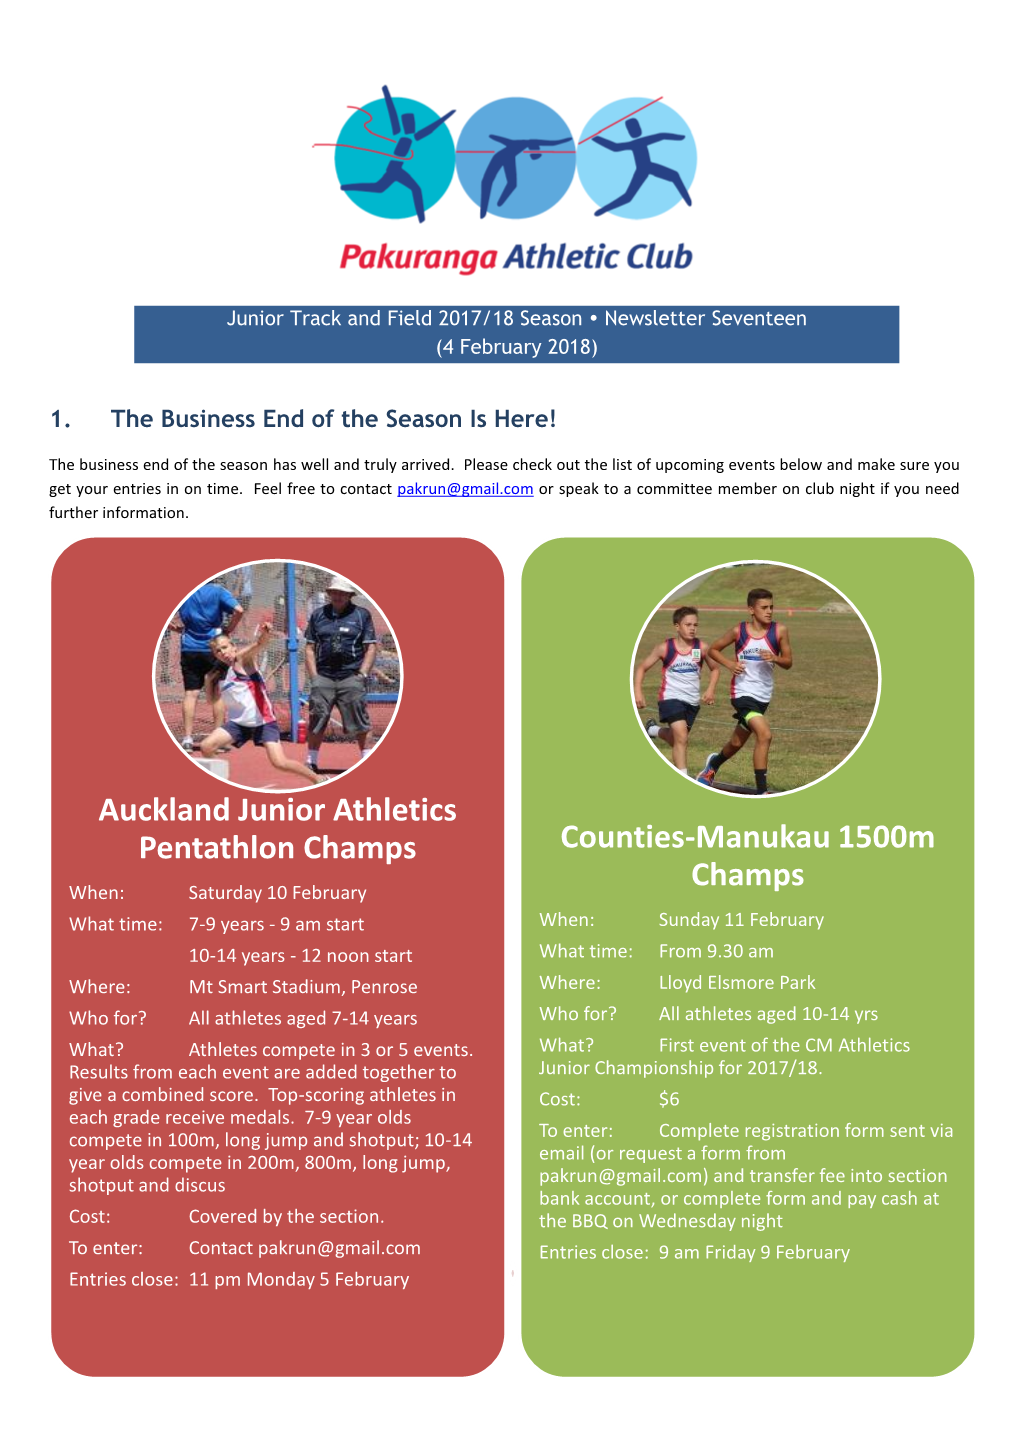 Auckland Junior Athletics Pentathlon Champs Counties-Manukau 1500M Champs